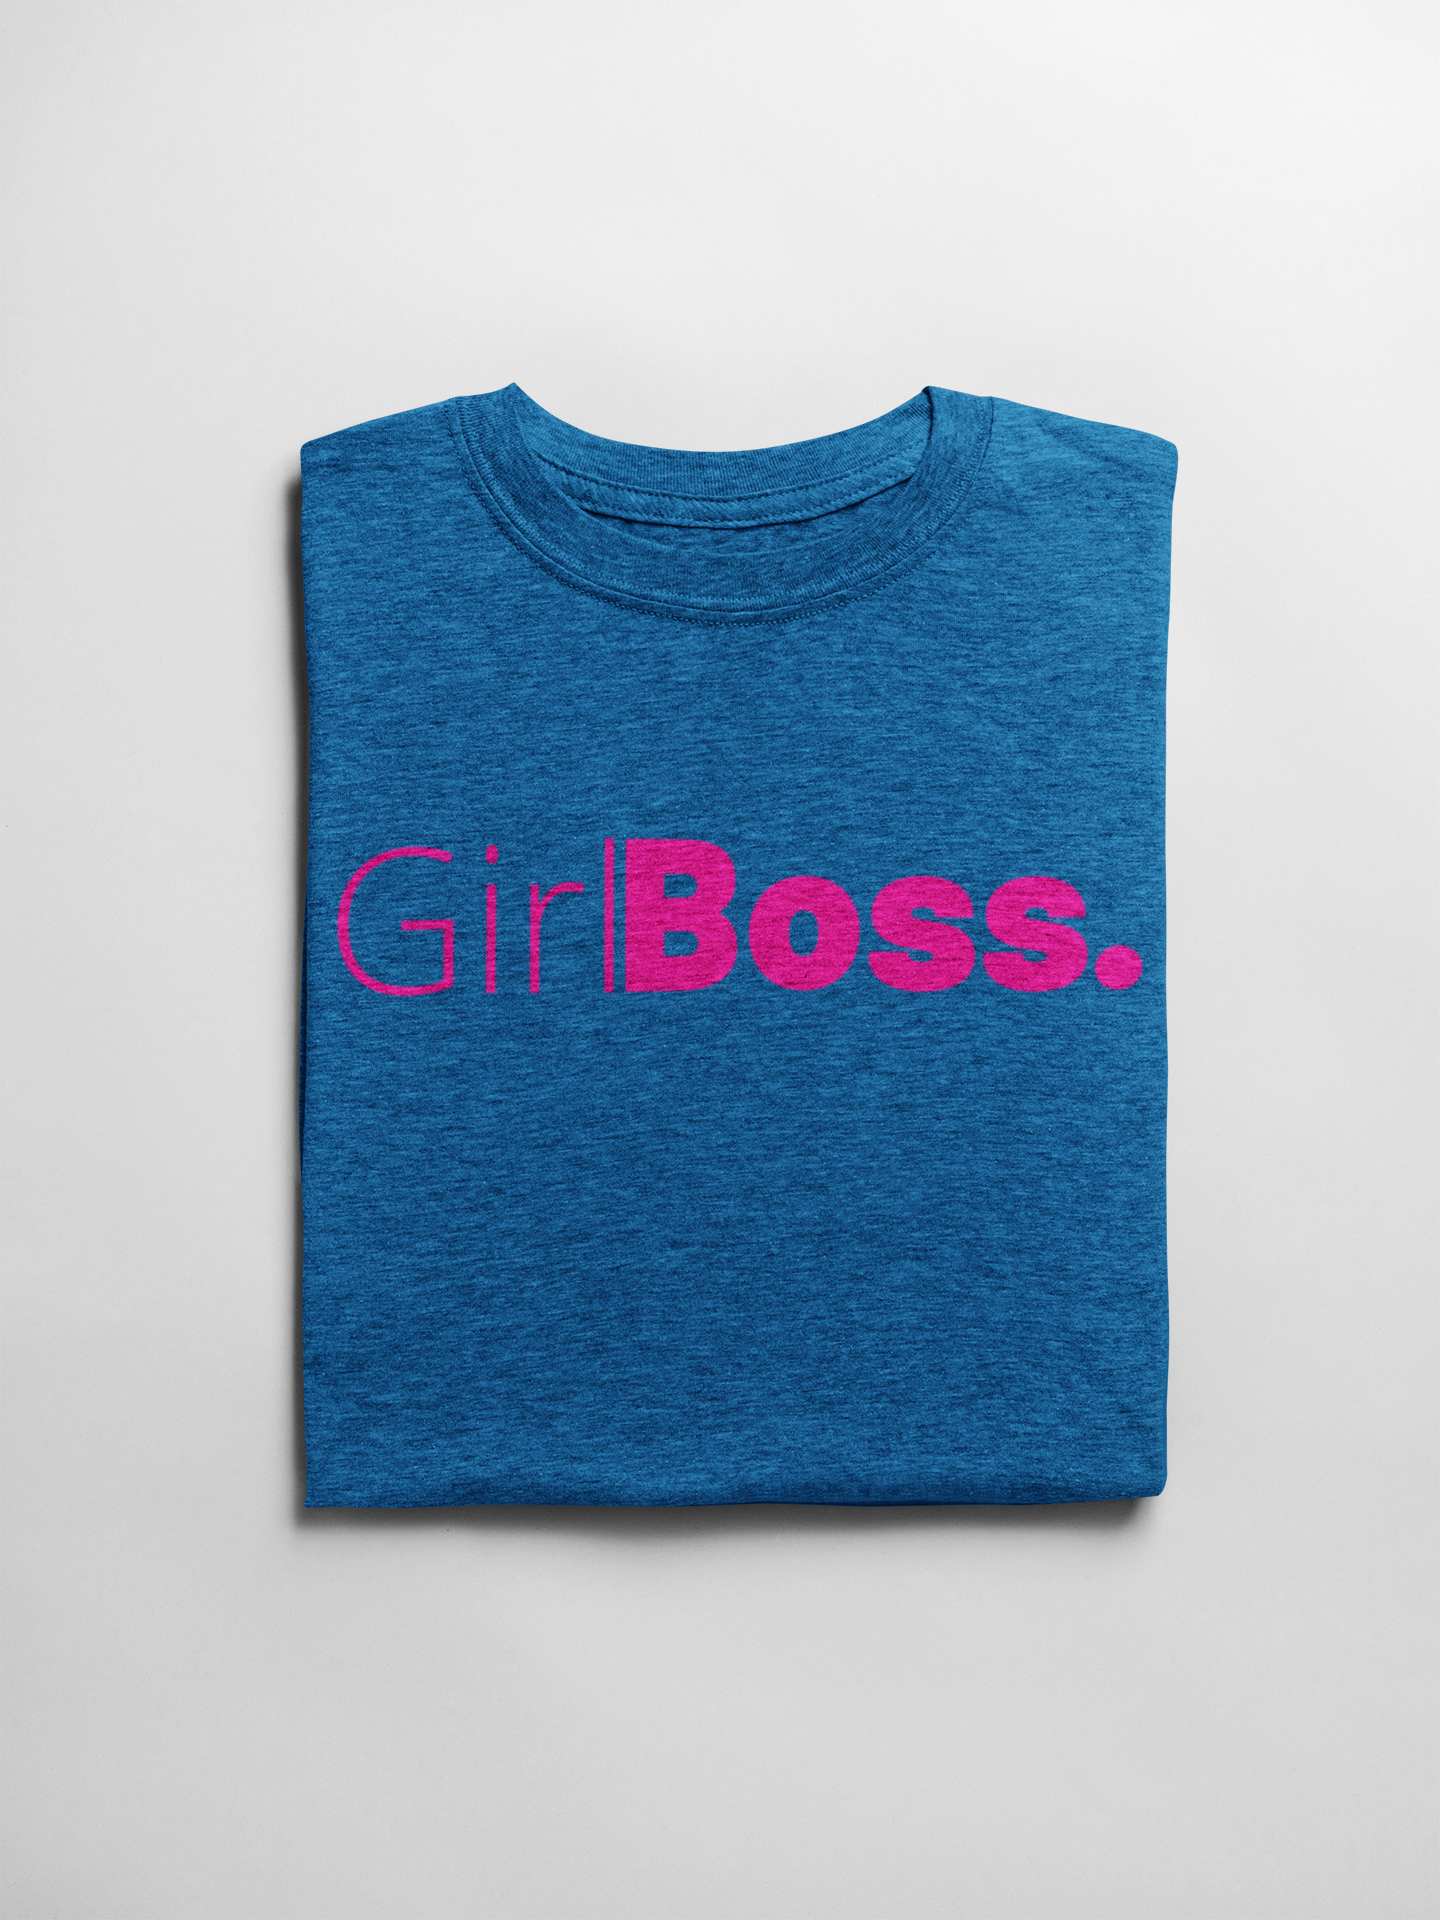 Girl Boss. Tee